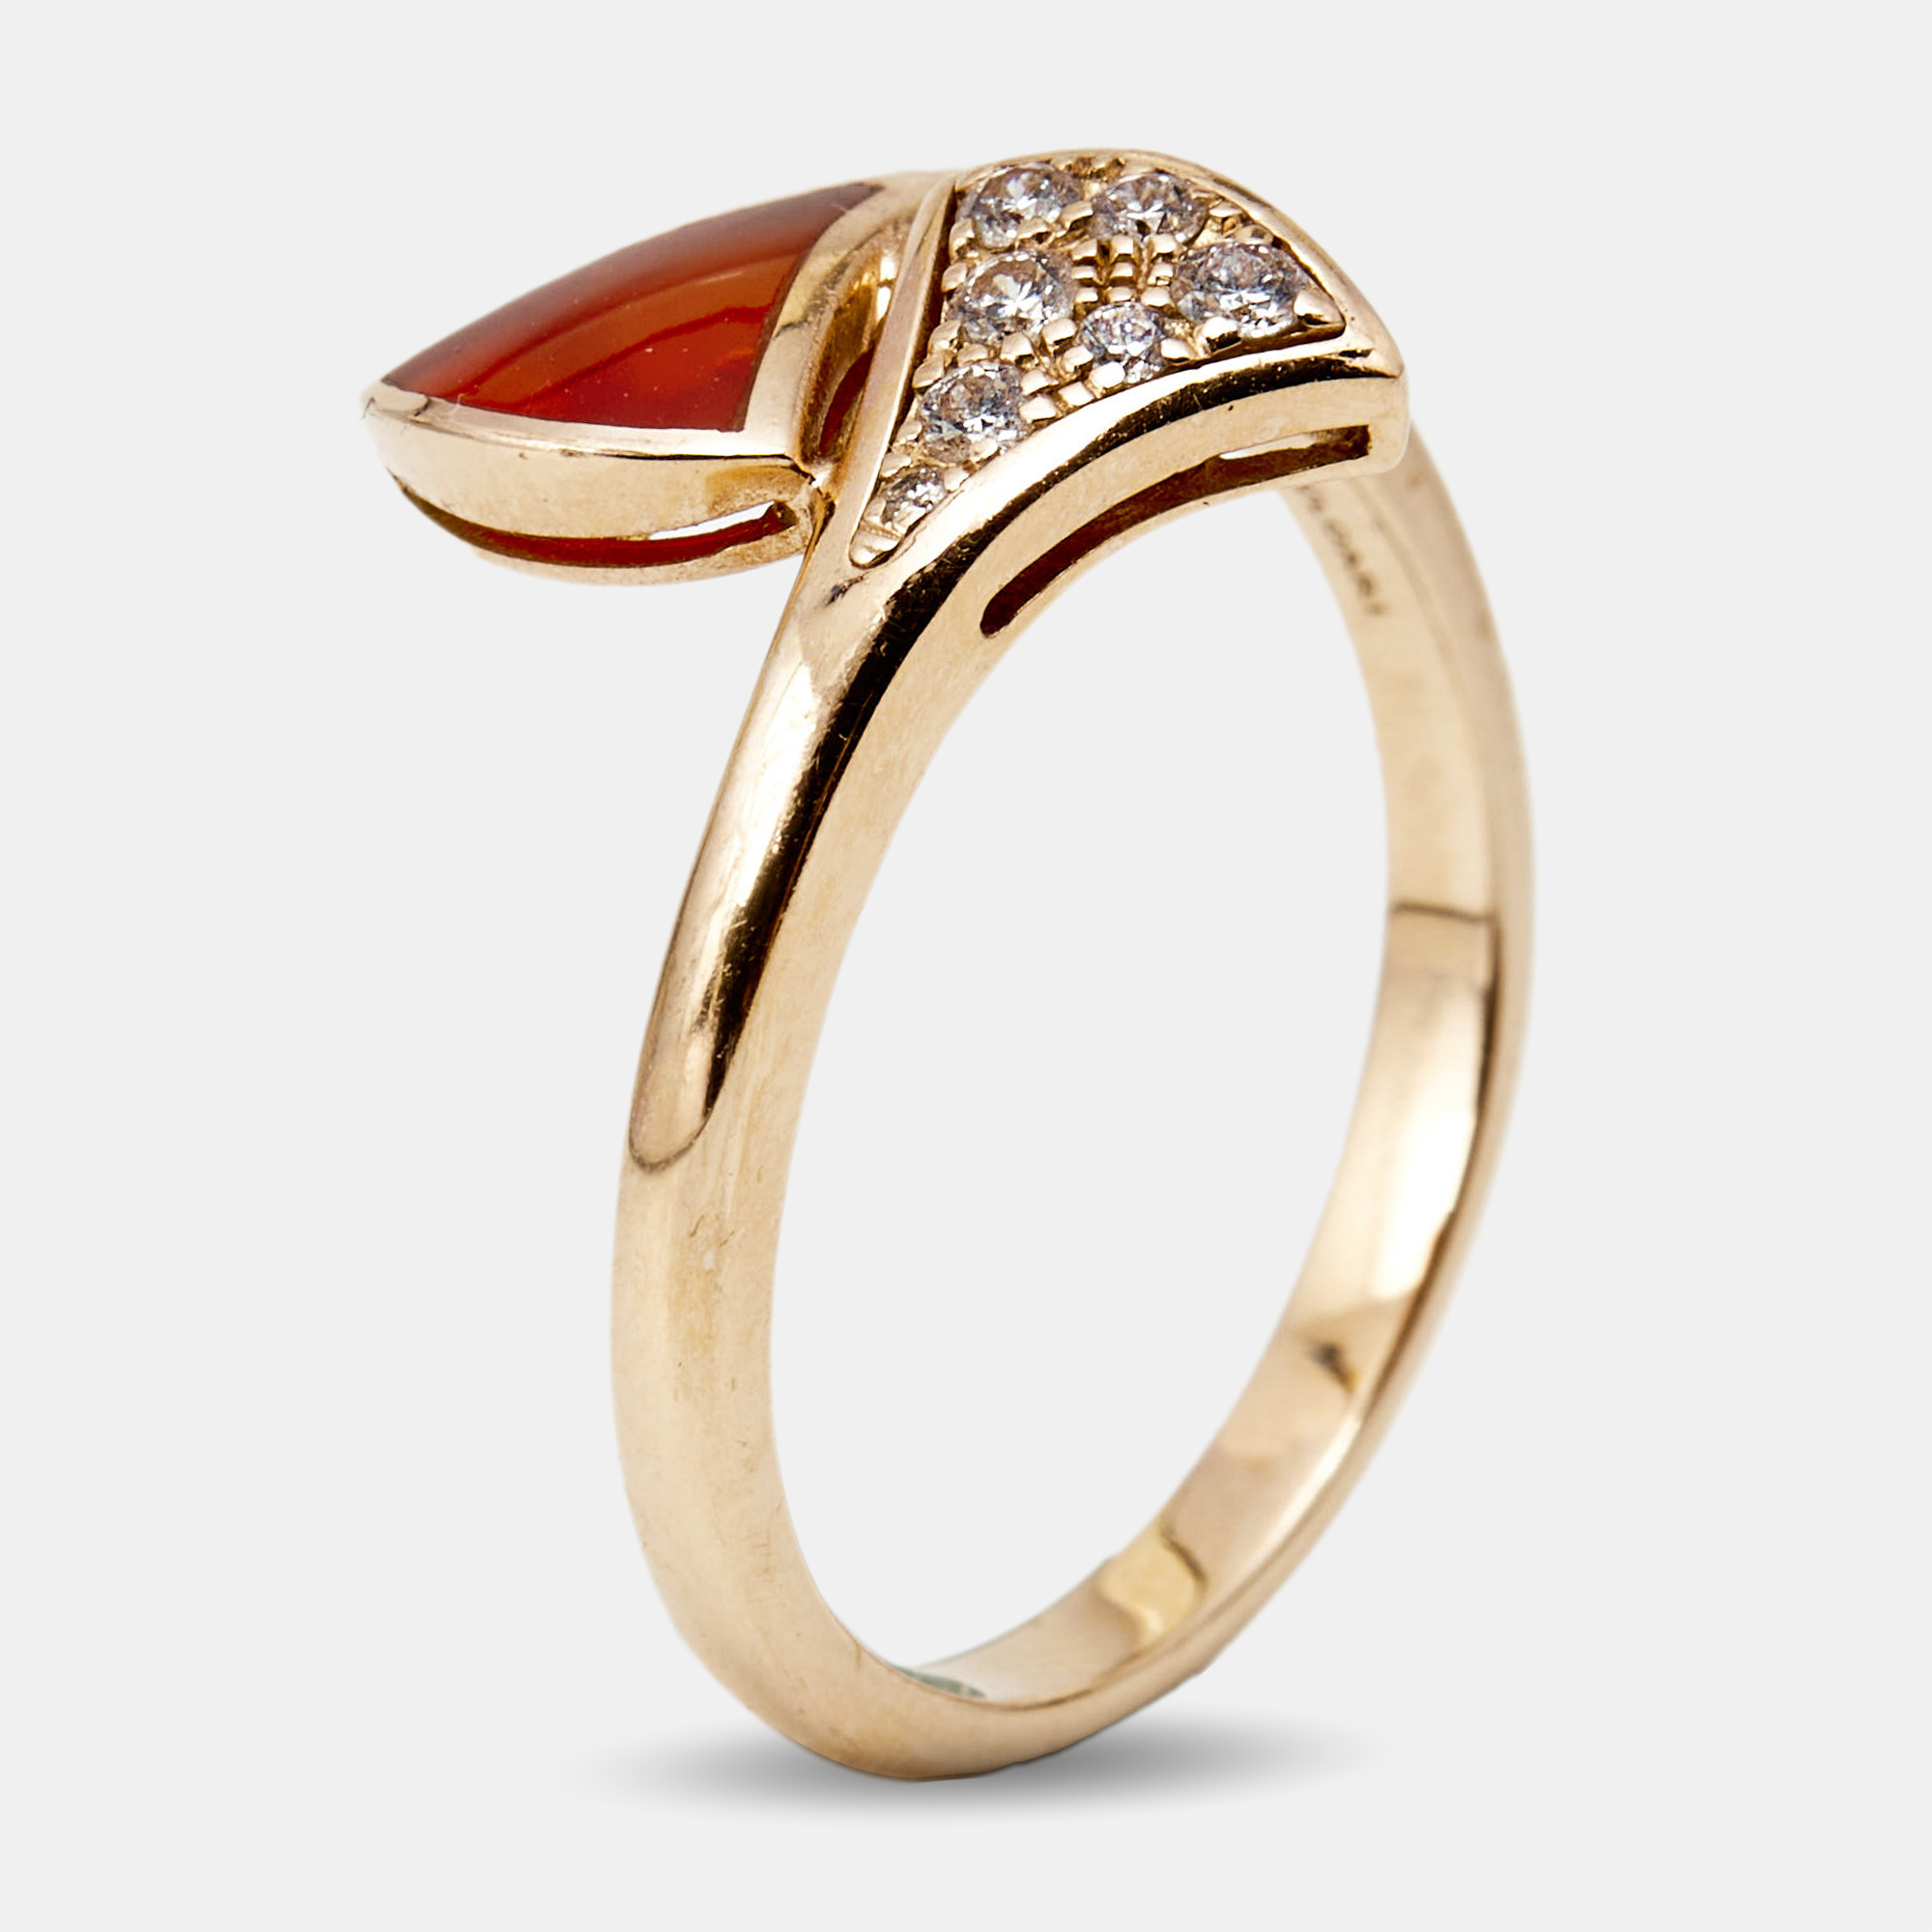 Bvlgari Divas' Dream Carnelian Diamonds 18k Rose Gold Ring Size 53